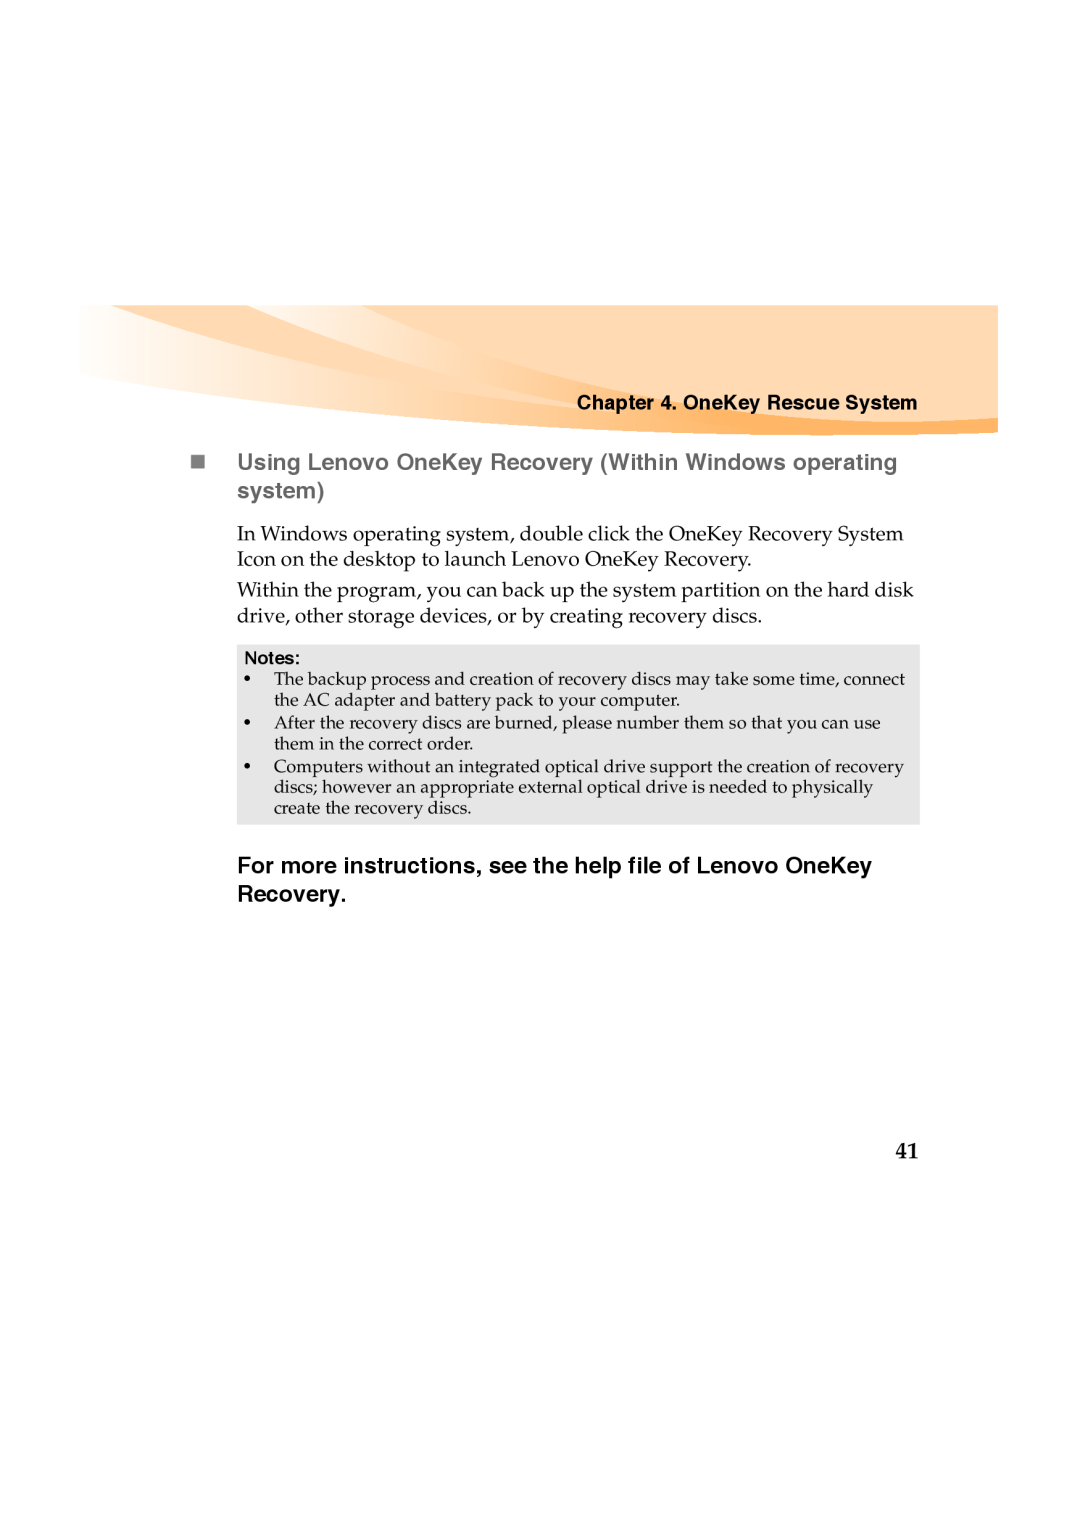 Lenovo Y460 manual „ Using Lenovo OneKey Recovery Within Windows operating system, OneKey Rescue System 